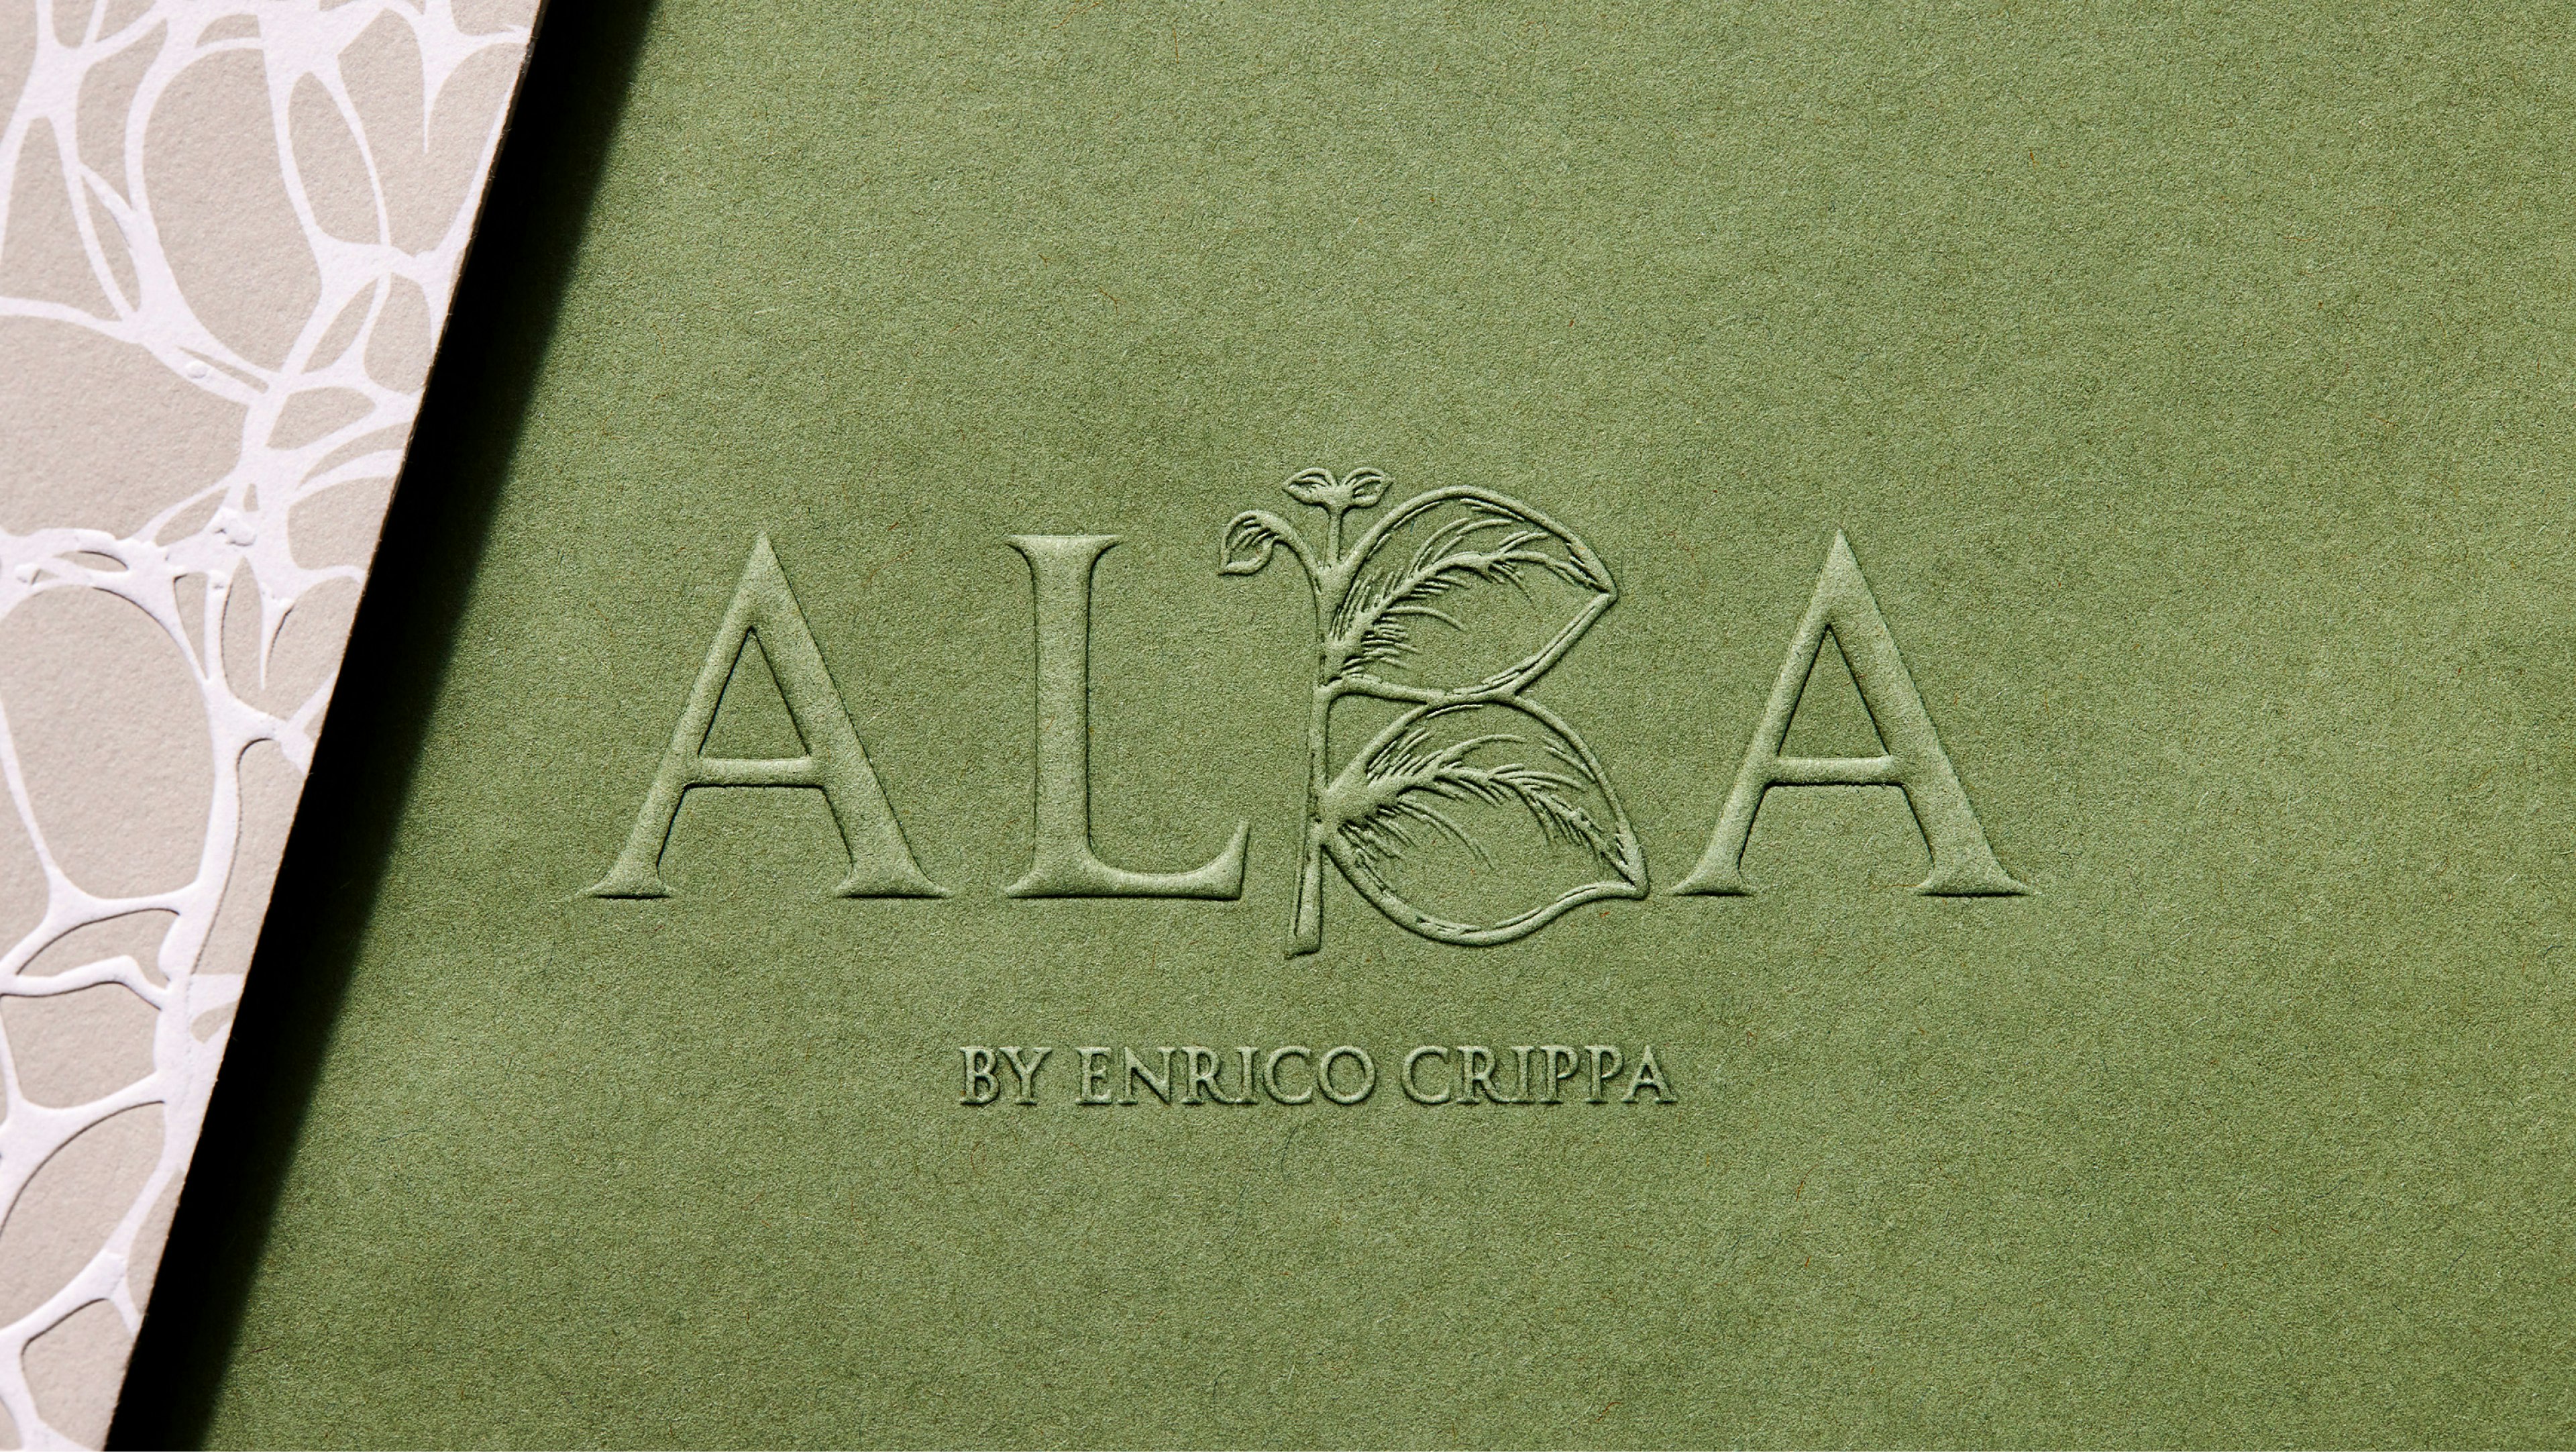 Alba’s menu cover